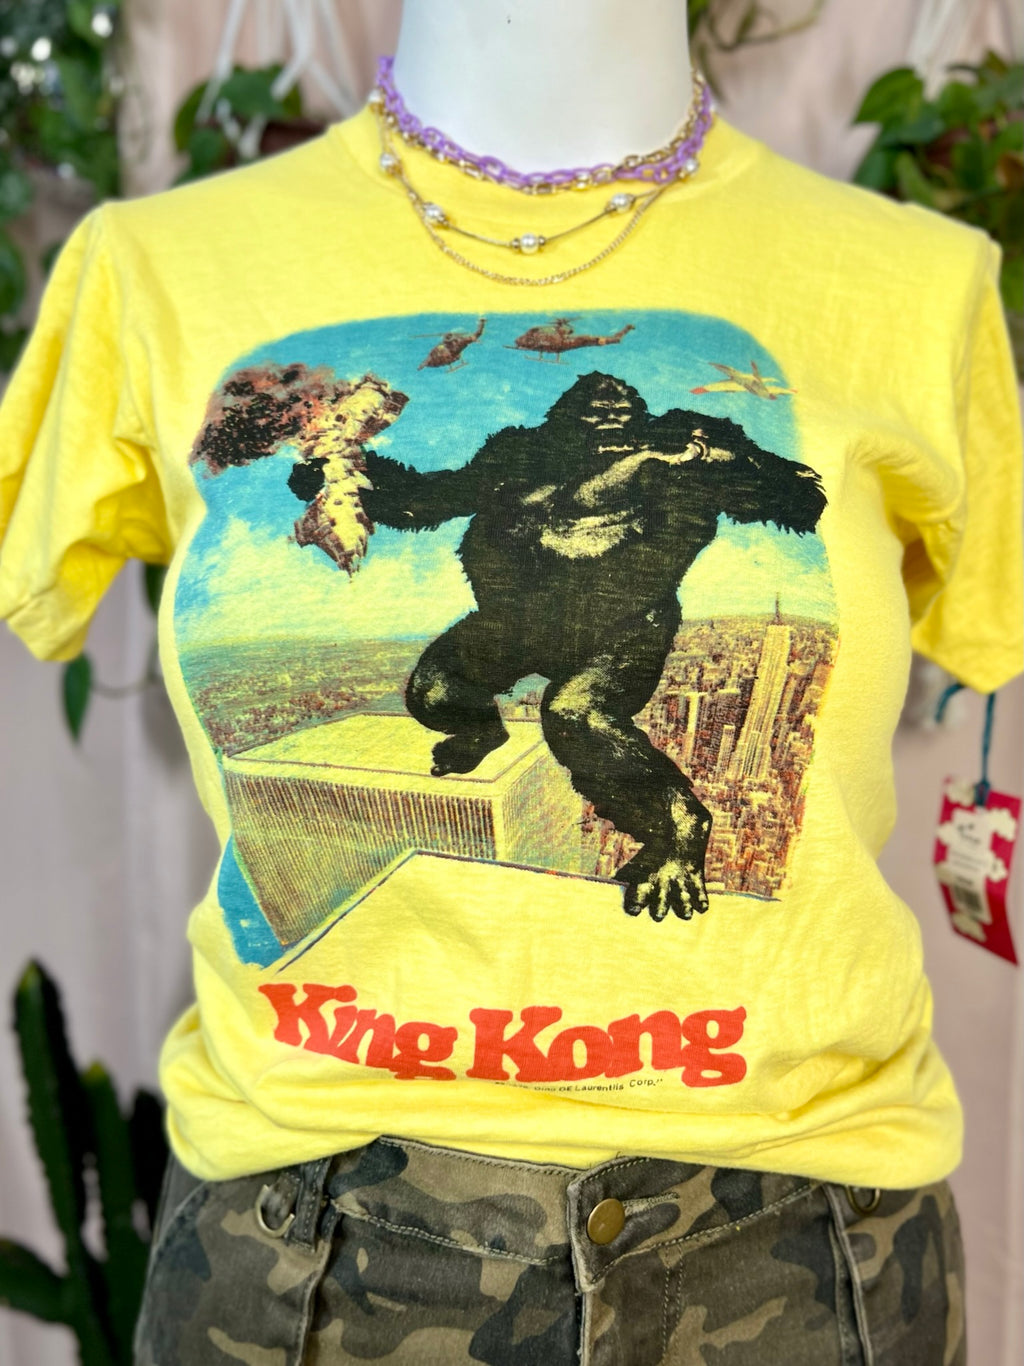 ORIGINAL 1970's King Kong Promo Tee